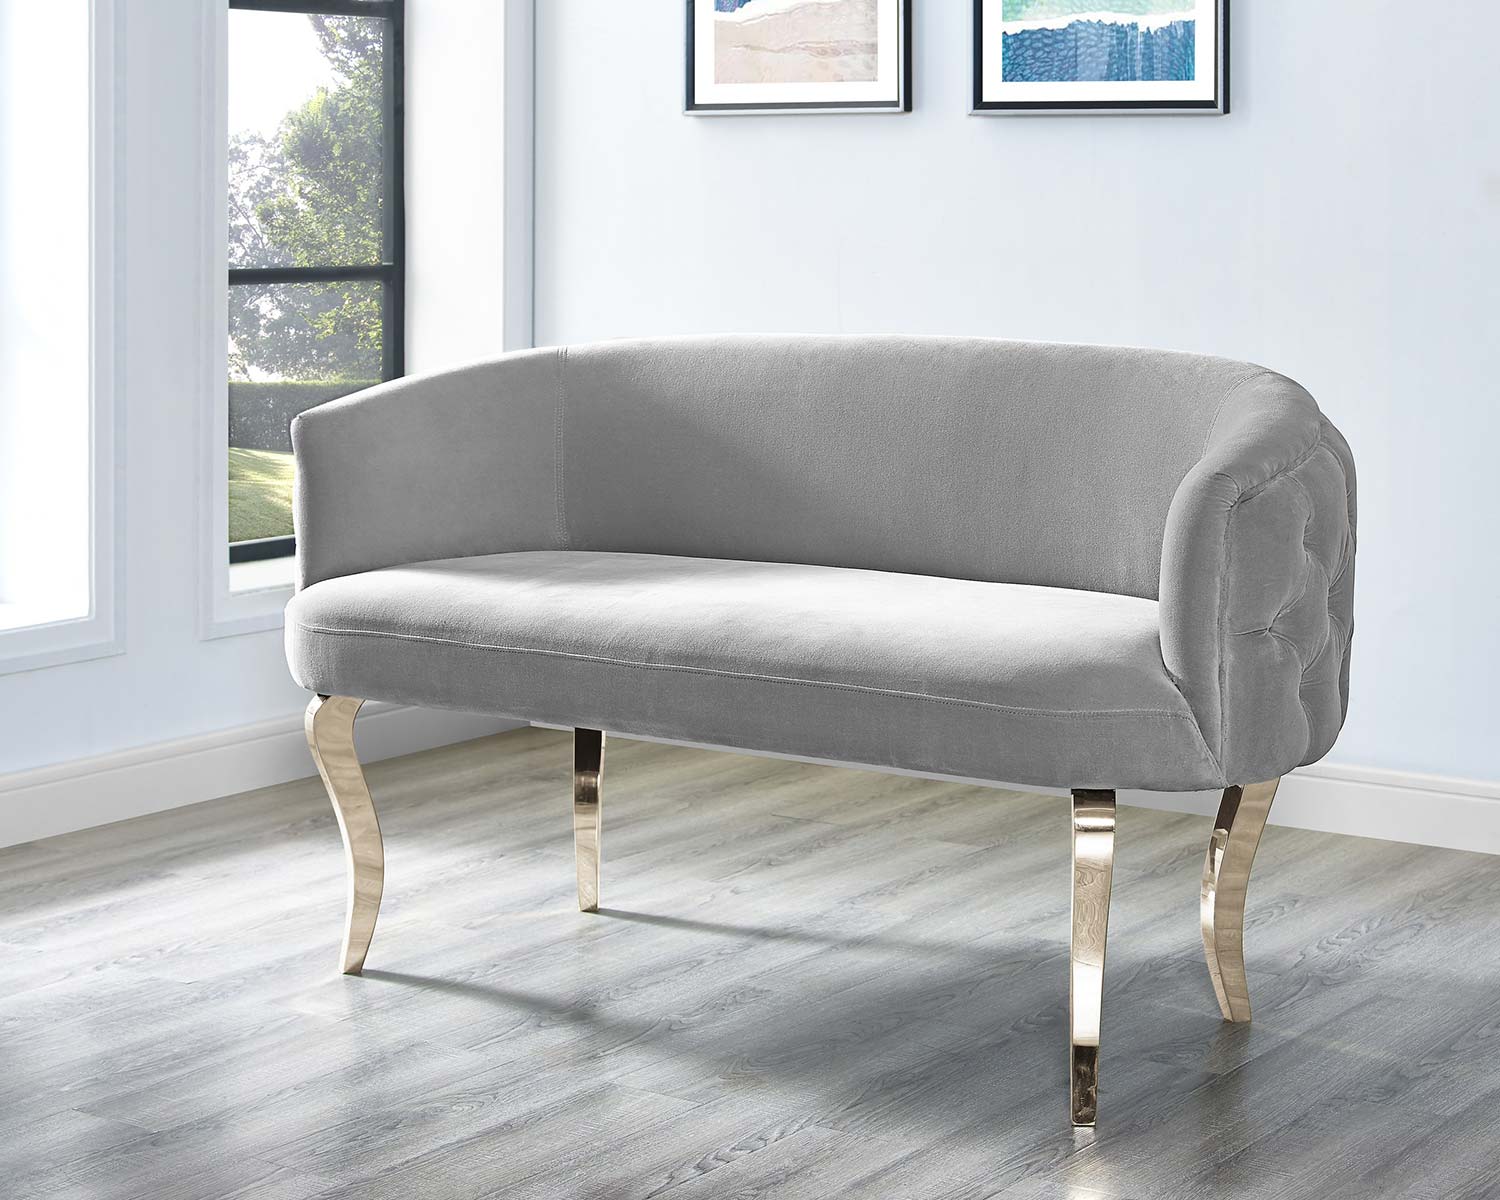 TOV Furniture Adina Loveseat with Gold Legs - Grey